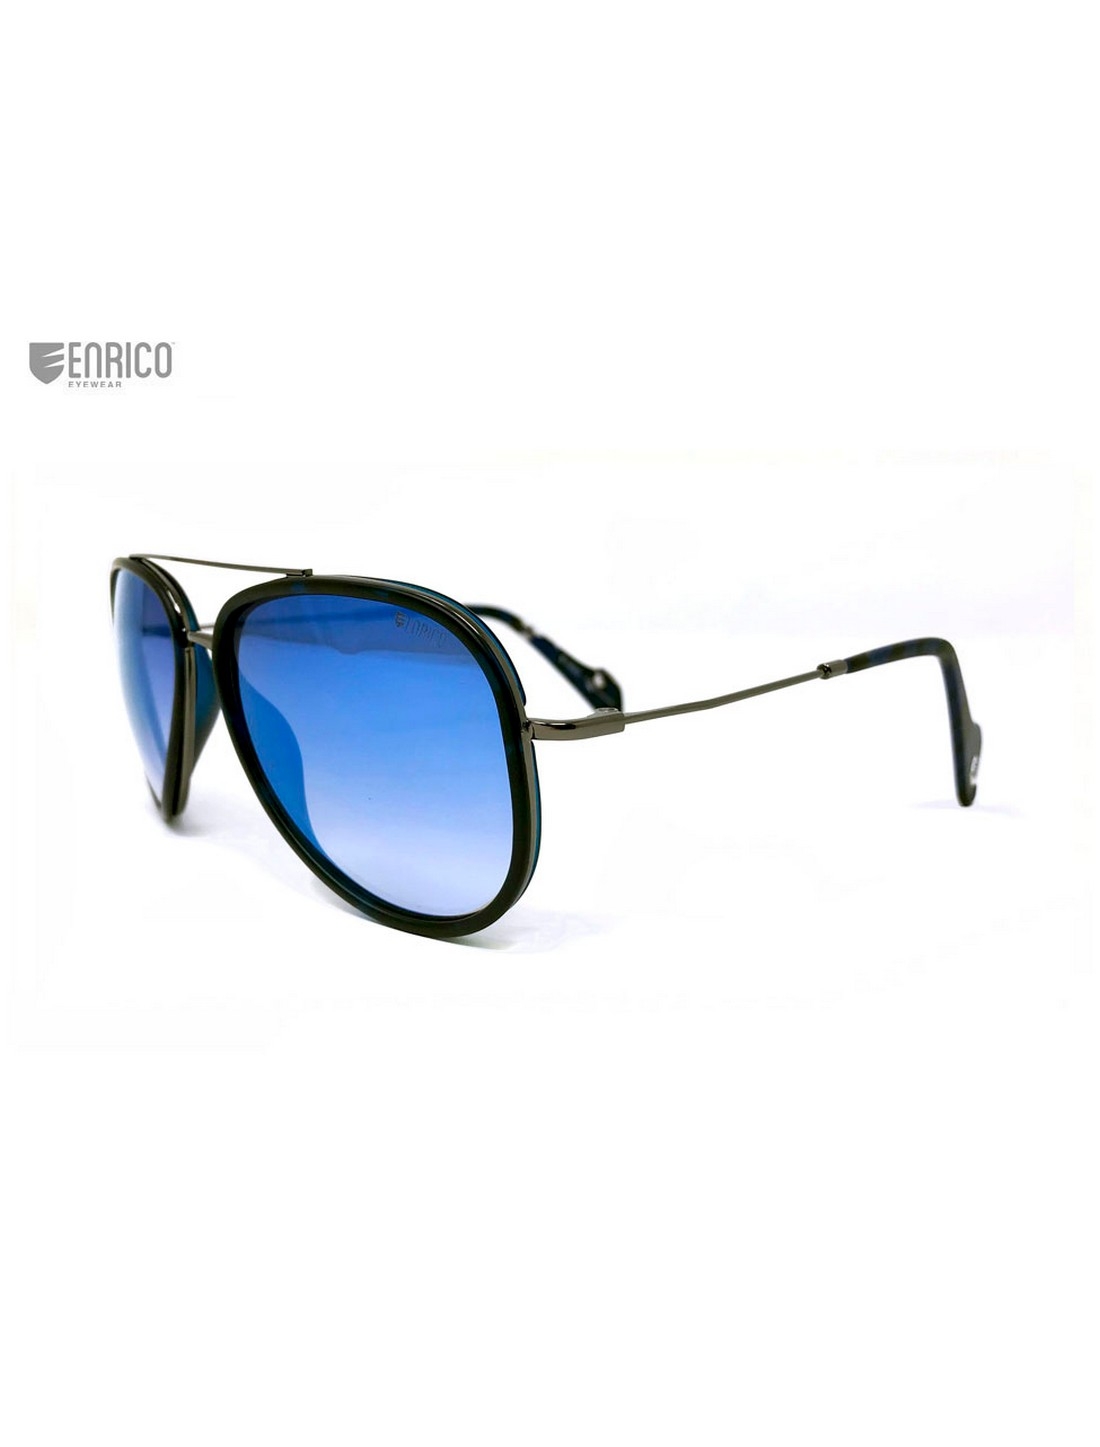 ENRICO | Enrico Aviacus Uv Protected & Polarized Aviator Sunglasses For Men ( Lens - Mirrored | Frame - Blue)